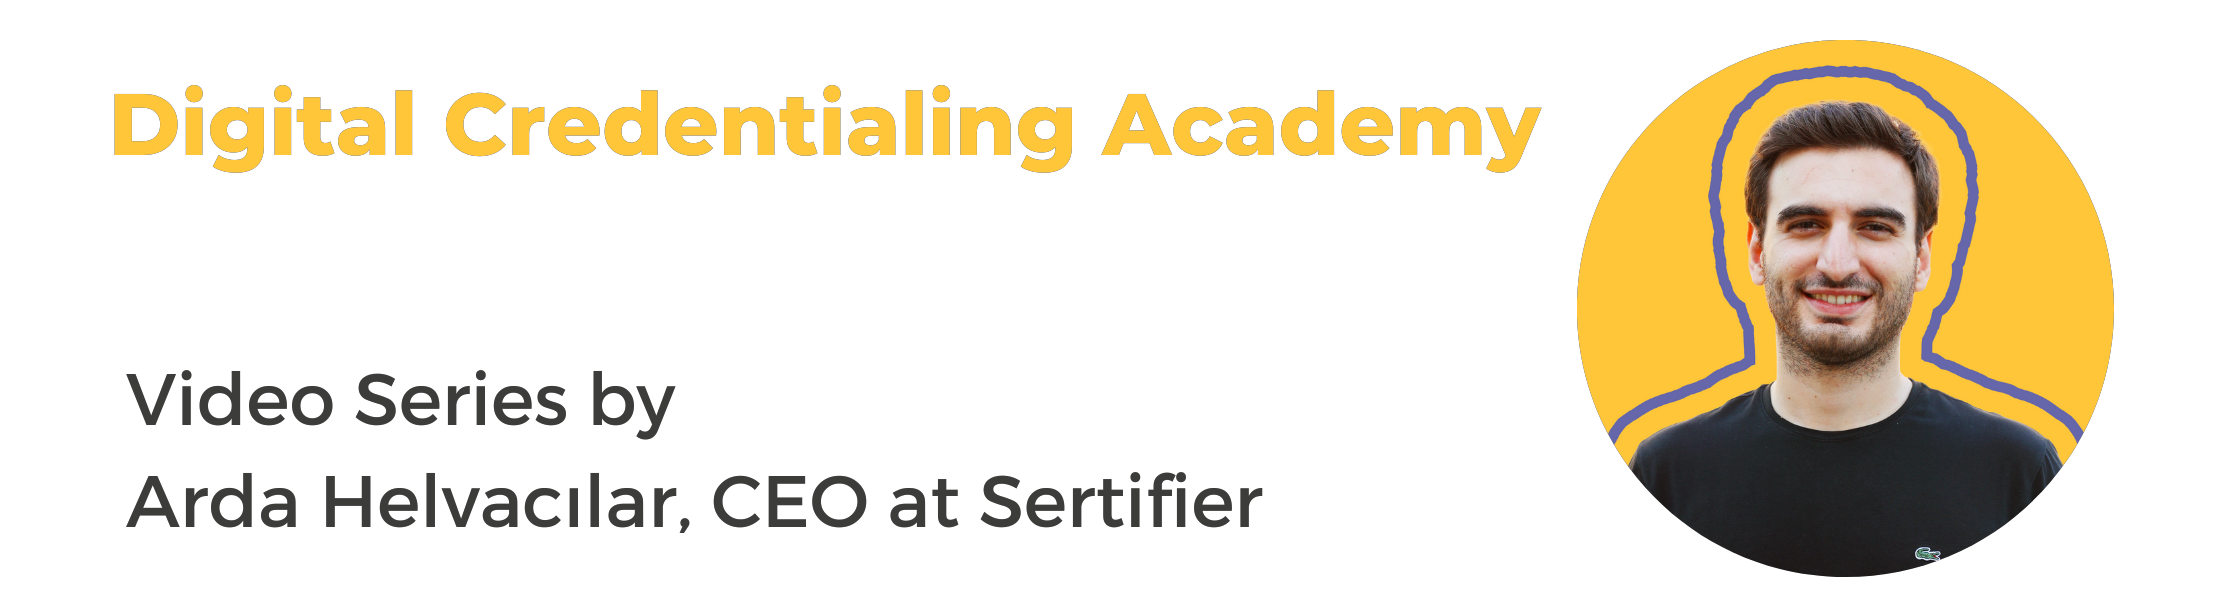 digital credentialing academy